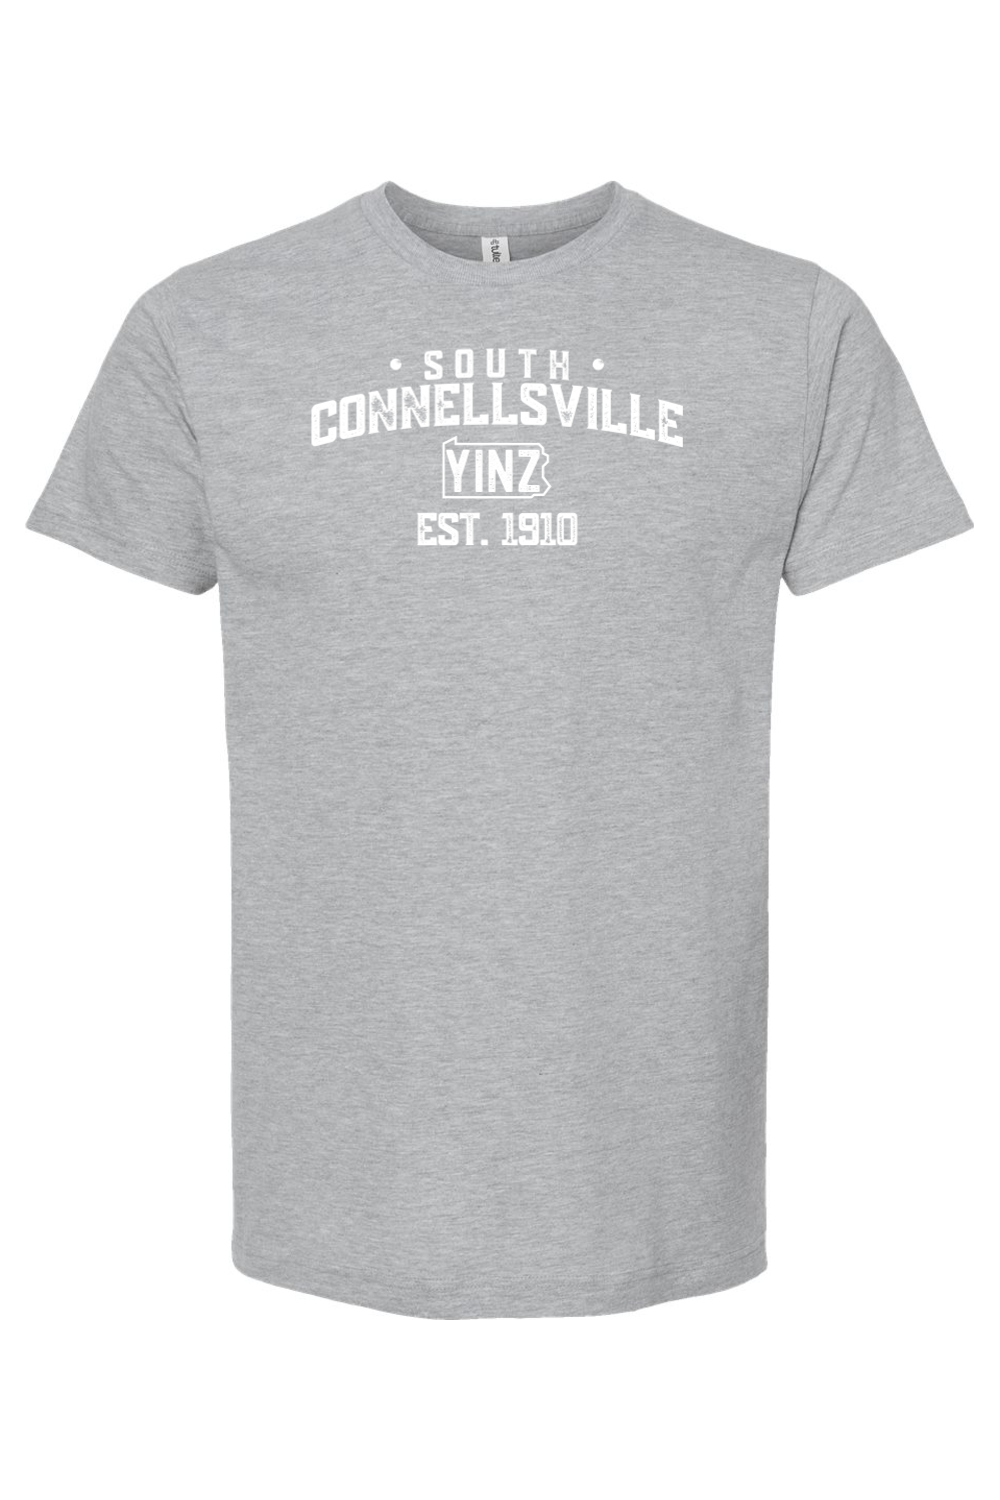 South Connellsville Yinzylvania - Yinzylvania